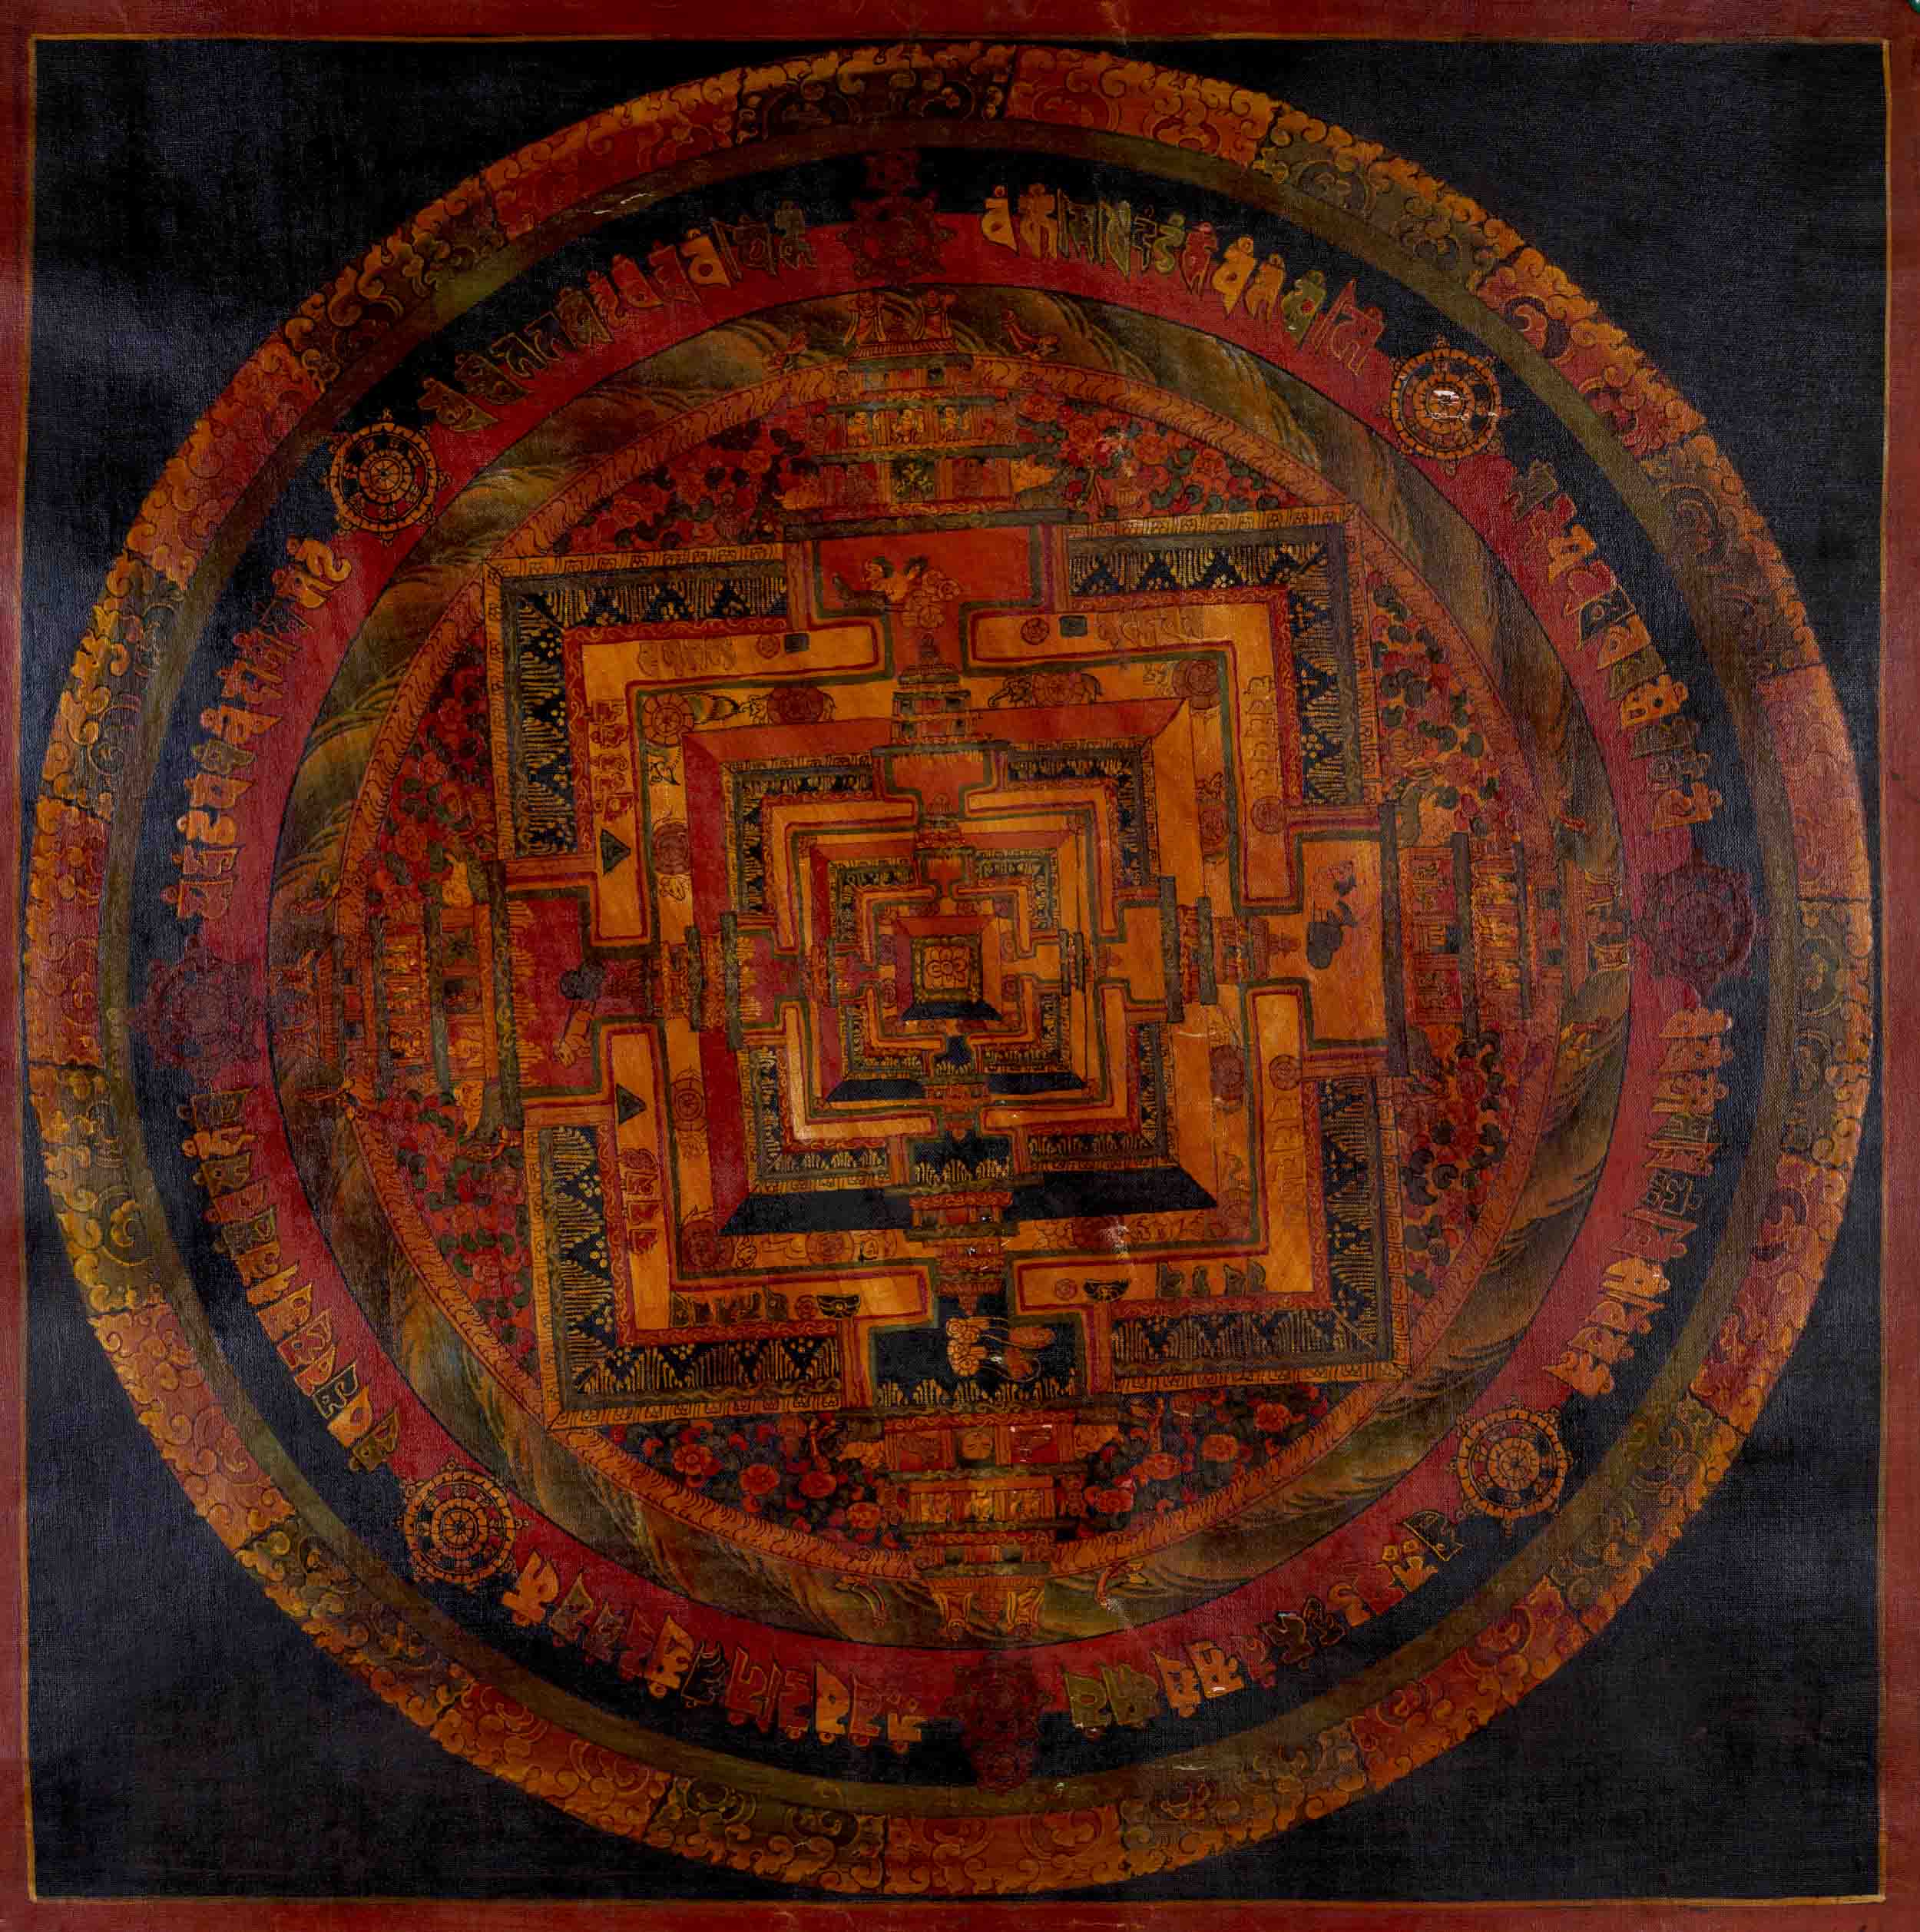 Oil Varnished Kalachakra Mandala Thangka Painting | Wall Hanging Yoga Meditation